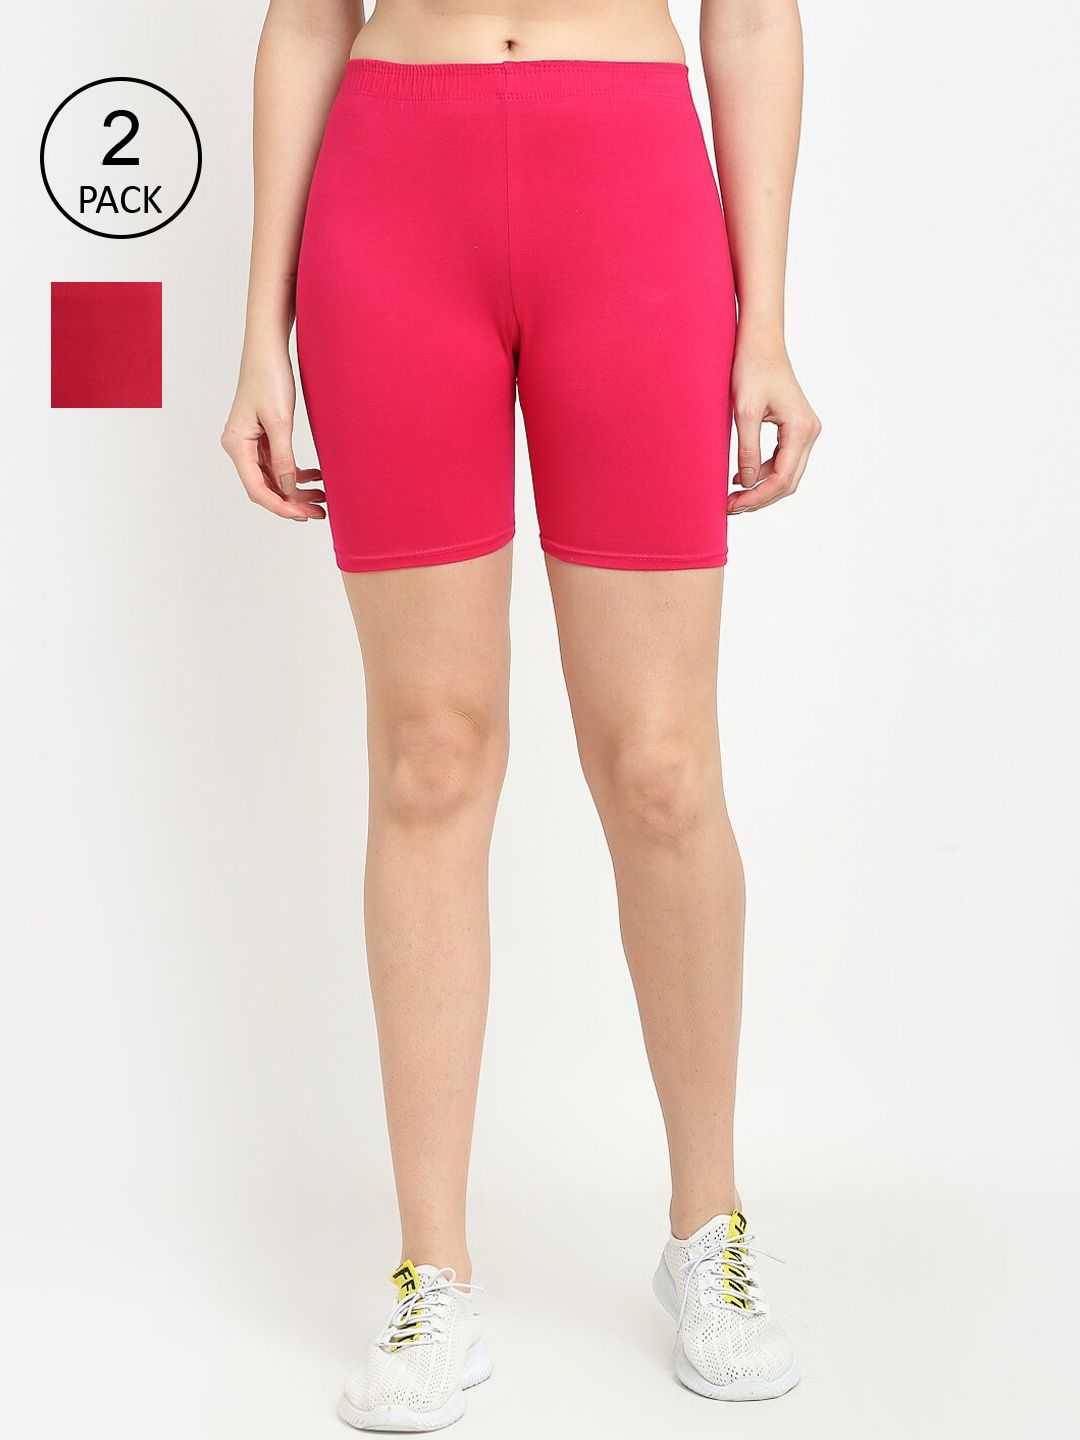 GRACIT Women Pack of 2 Pink & Maroon Biker Shorts Price in India